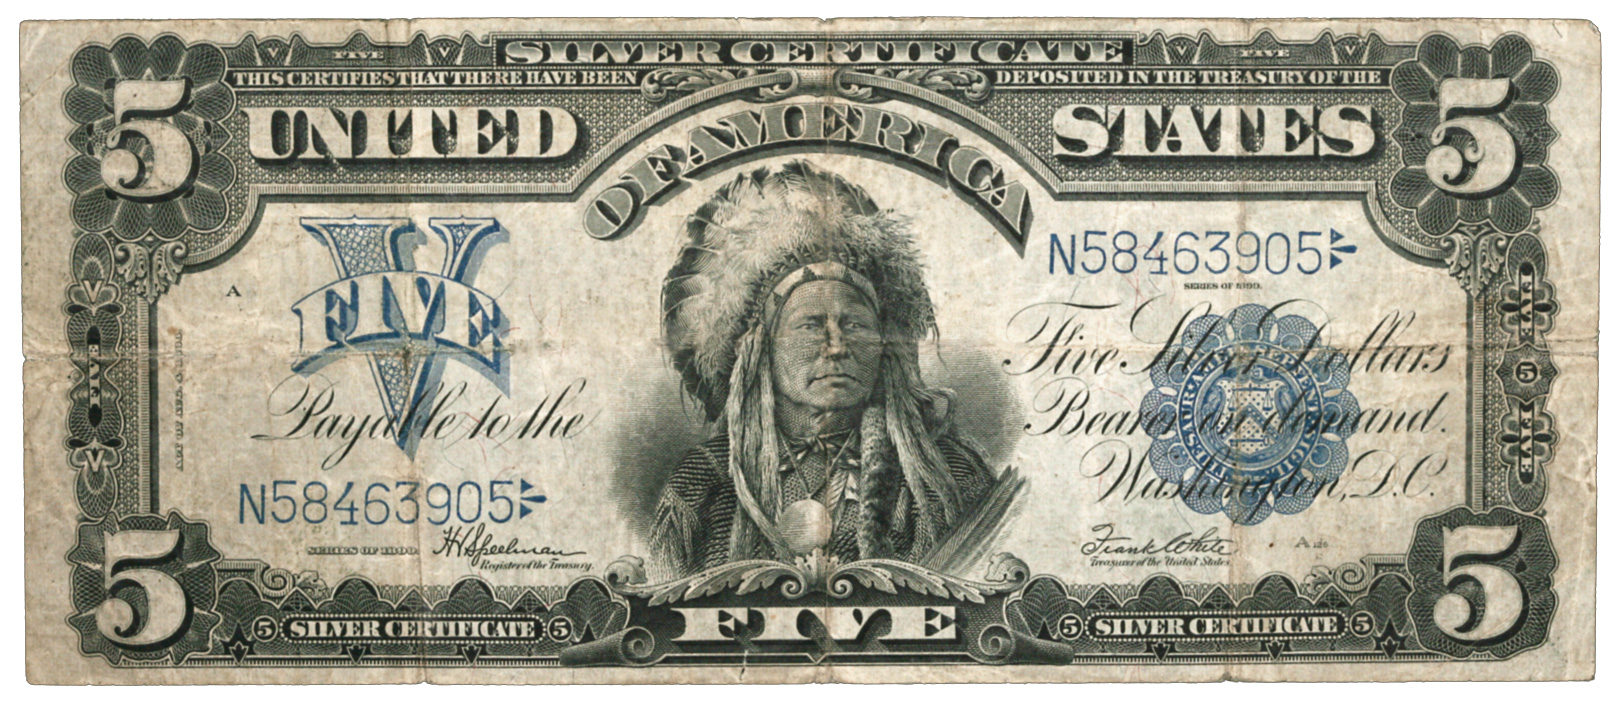 Americana Images of Historical U.S Currency Genuine Legal Tender $10 Bill BISON